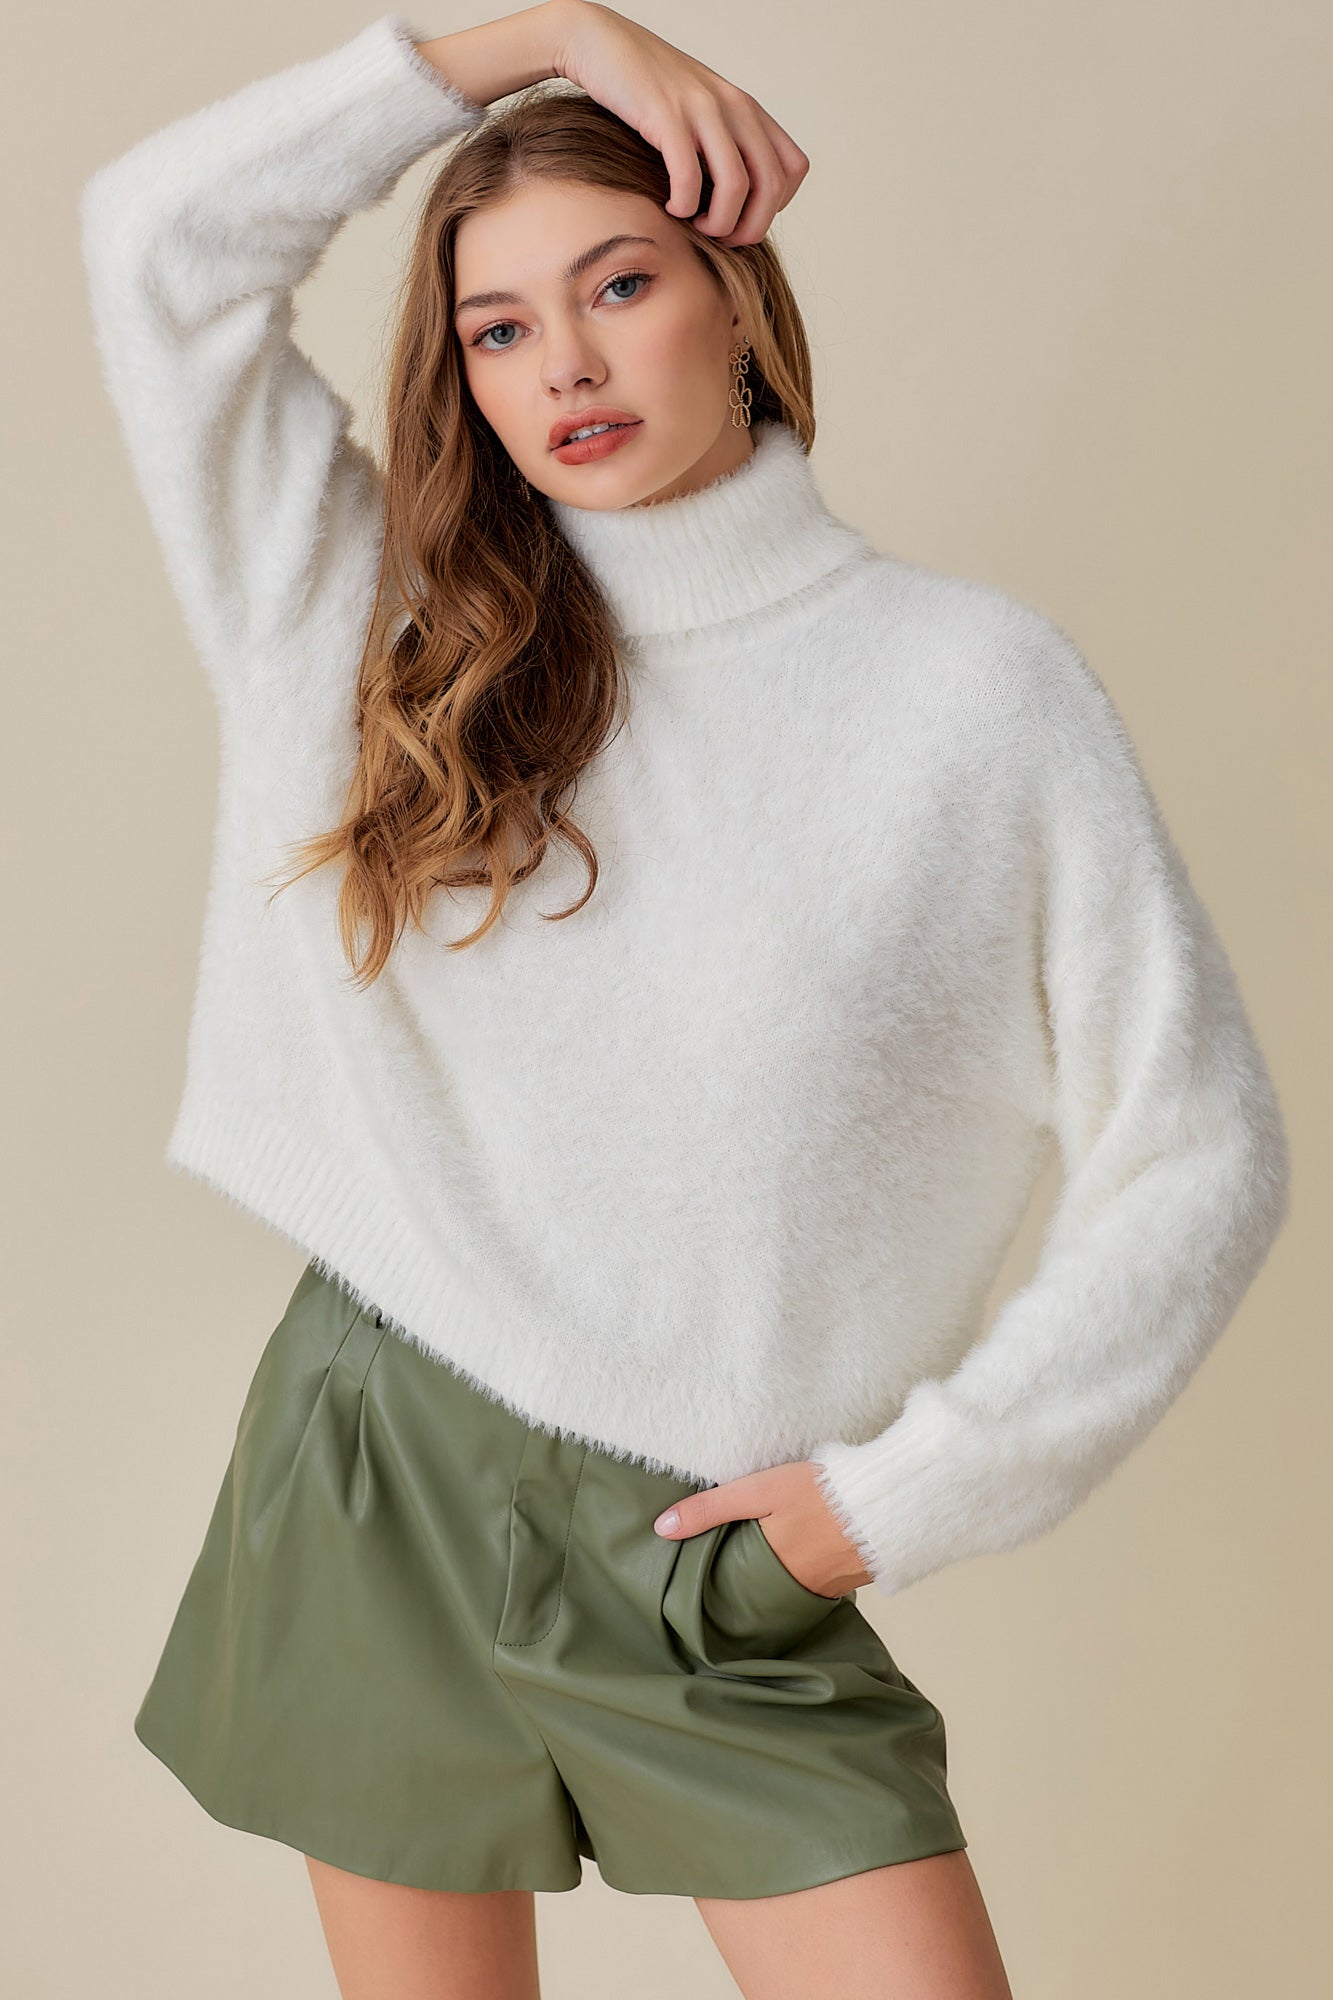 long sleeve, soft, turtleneck sweater